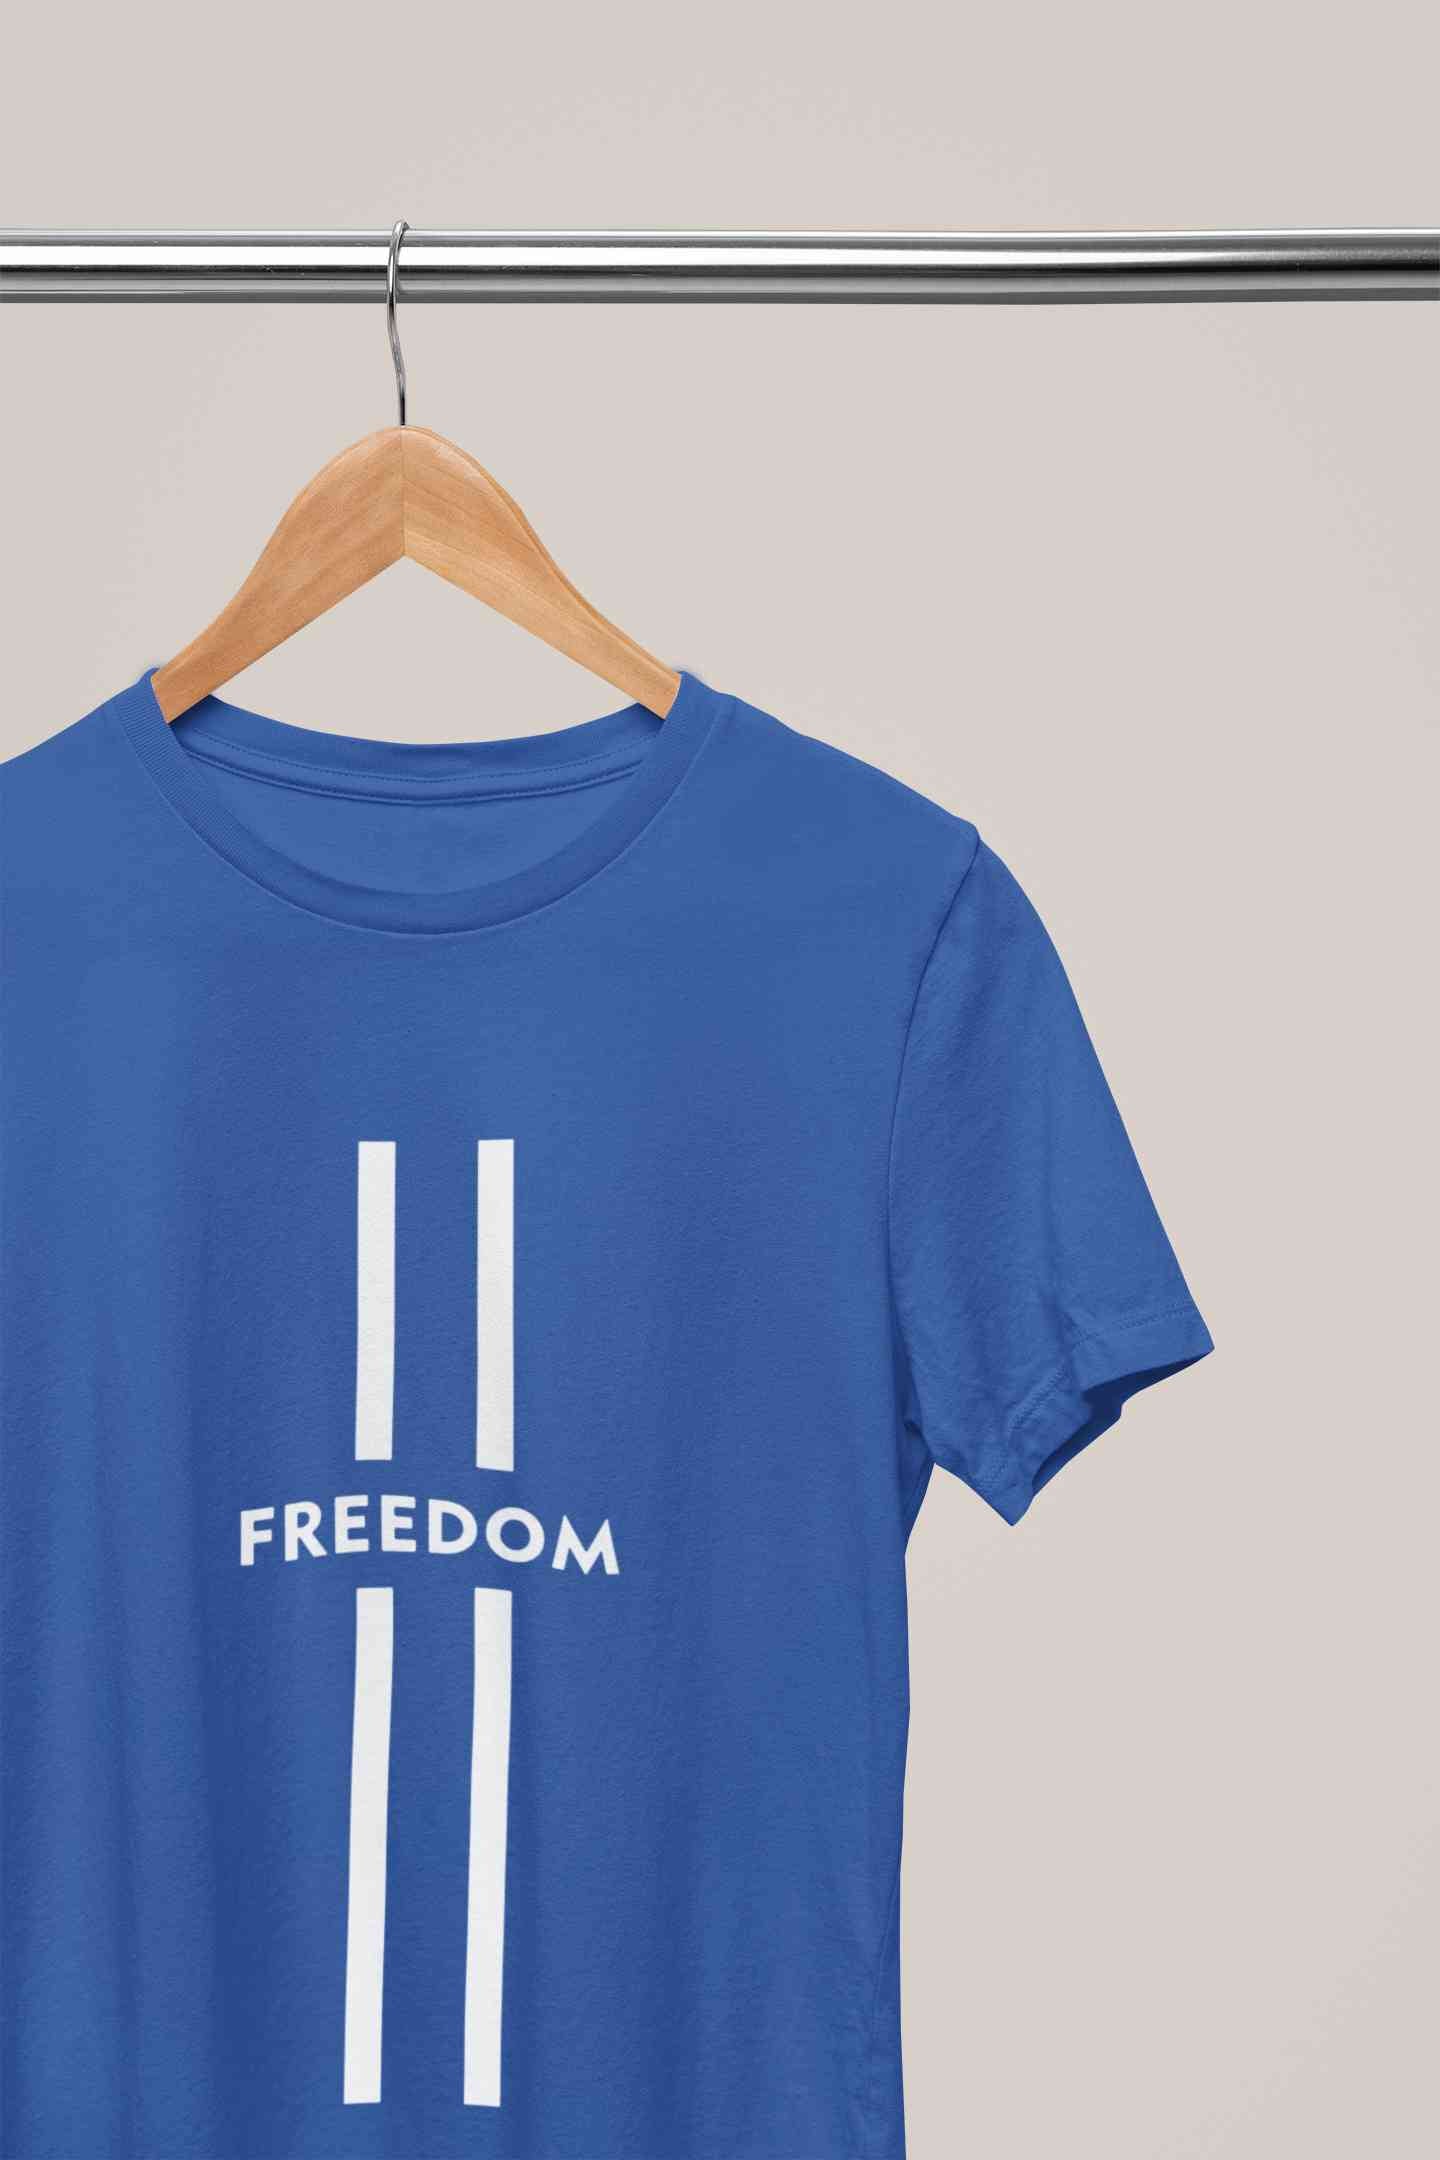 Strip Freedom Mens Half Sleeves T-shirt- FunkyTeesClub